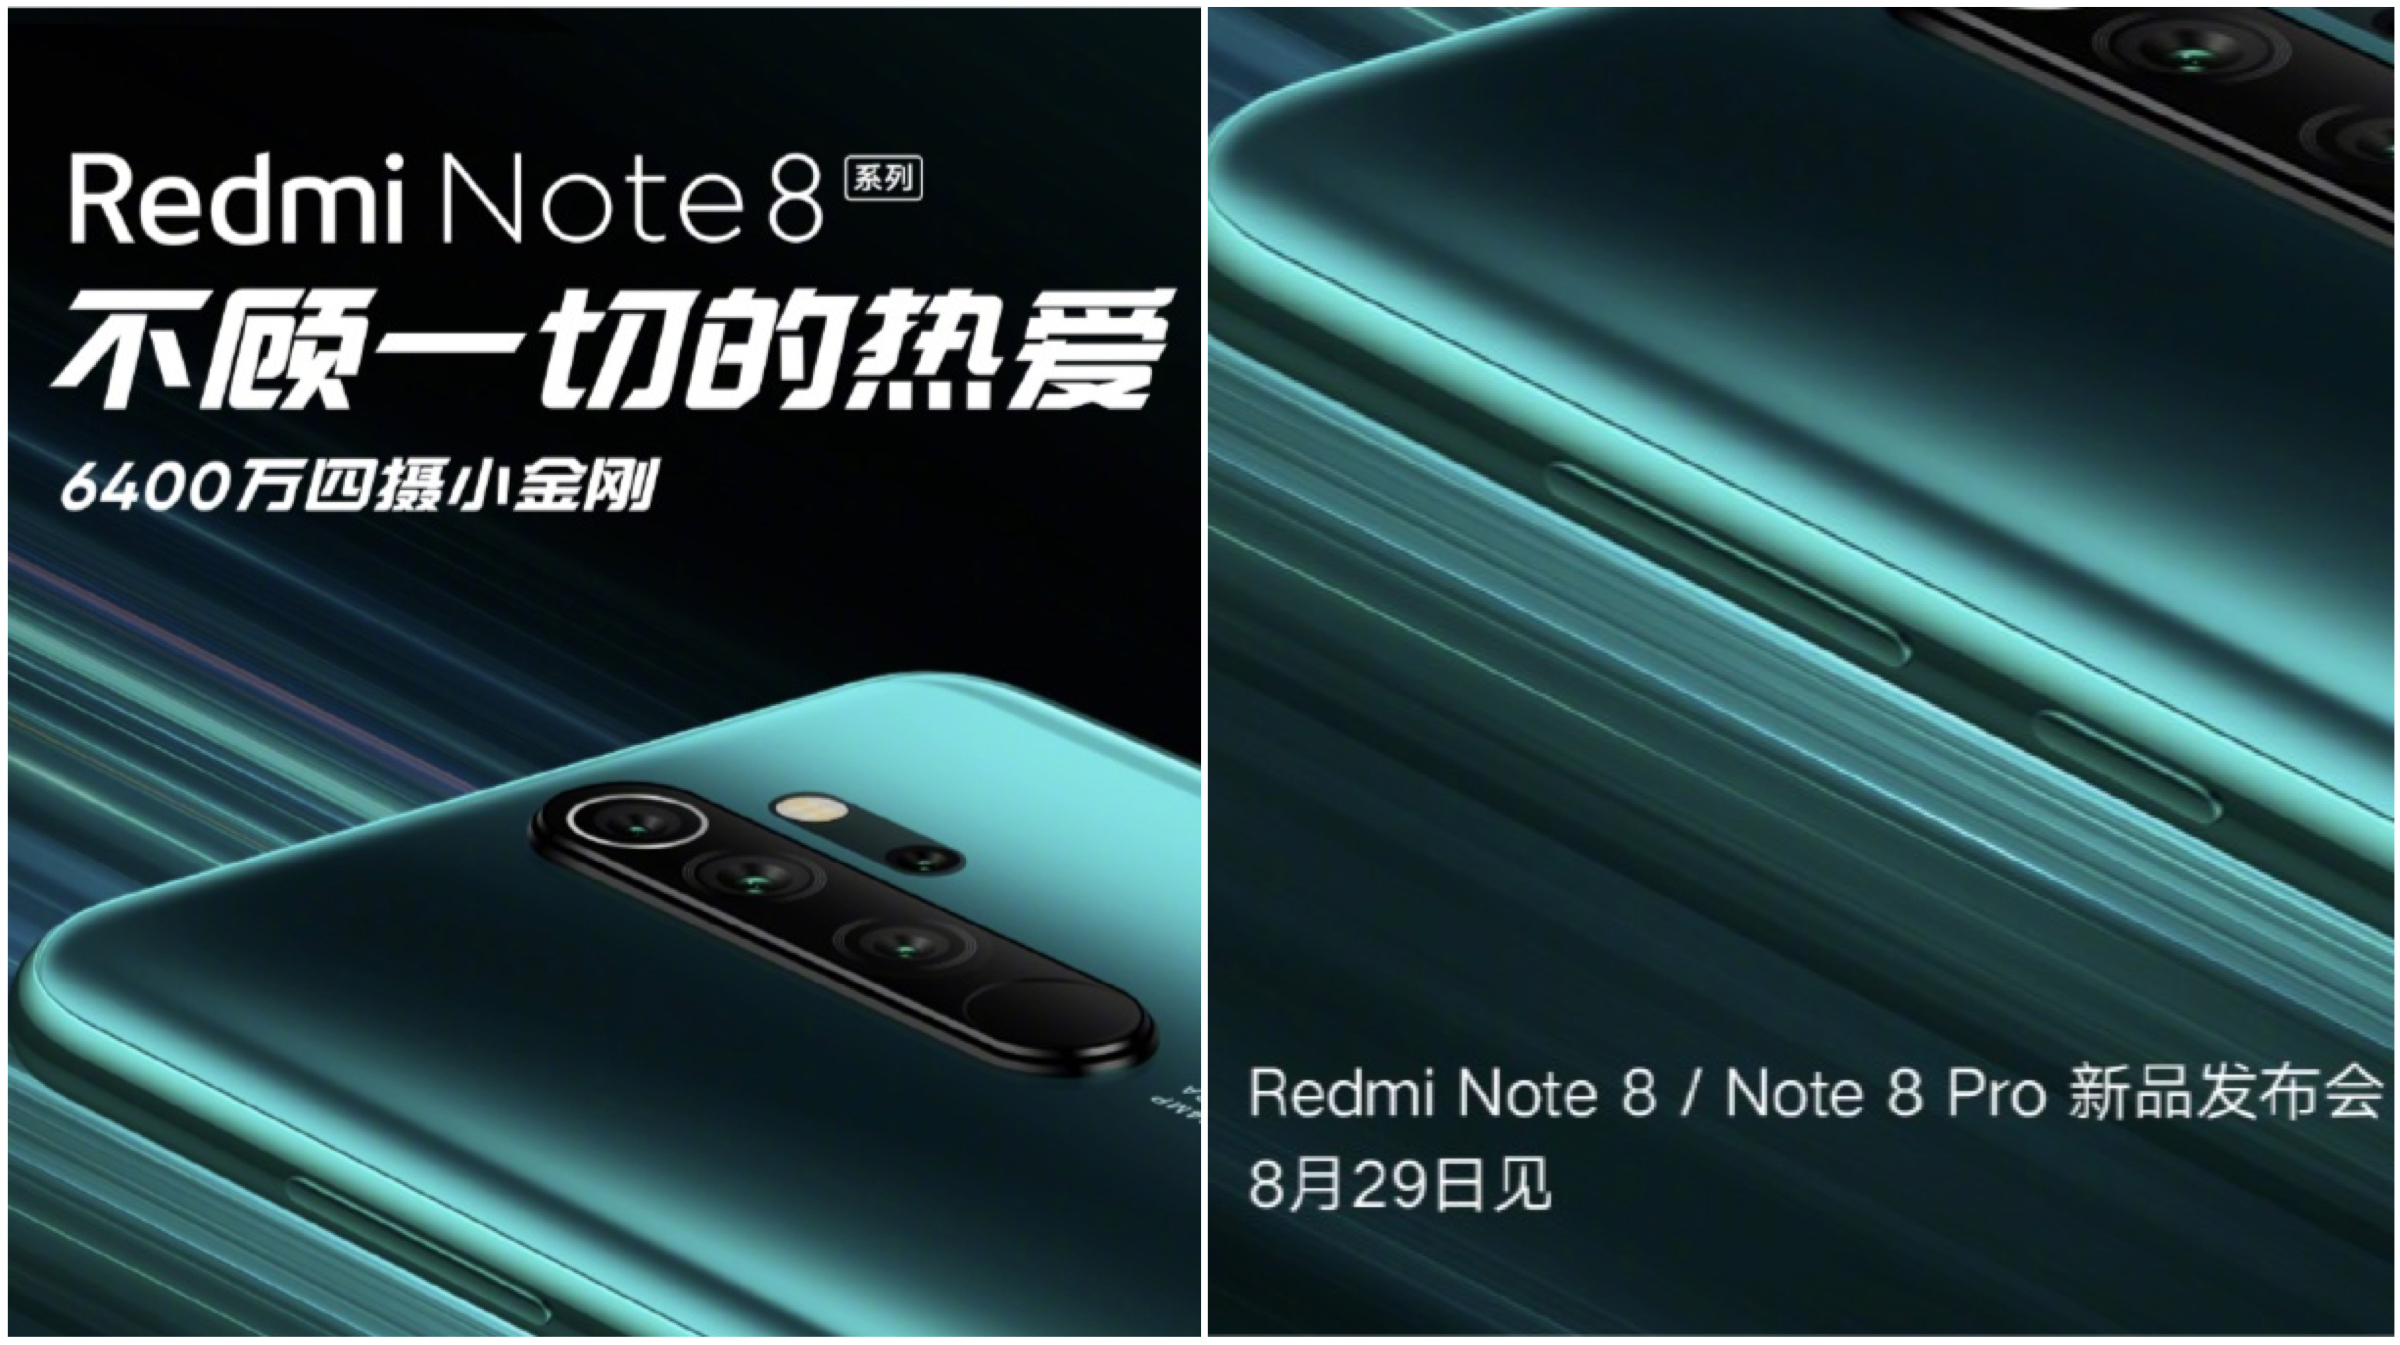 Xiaomi Redmi Note 8, Note 8 Pro Цены просочились до запуска 1